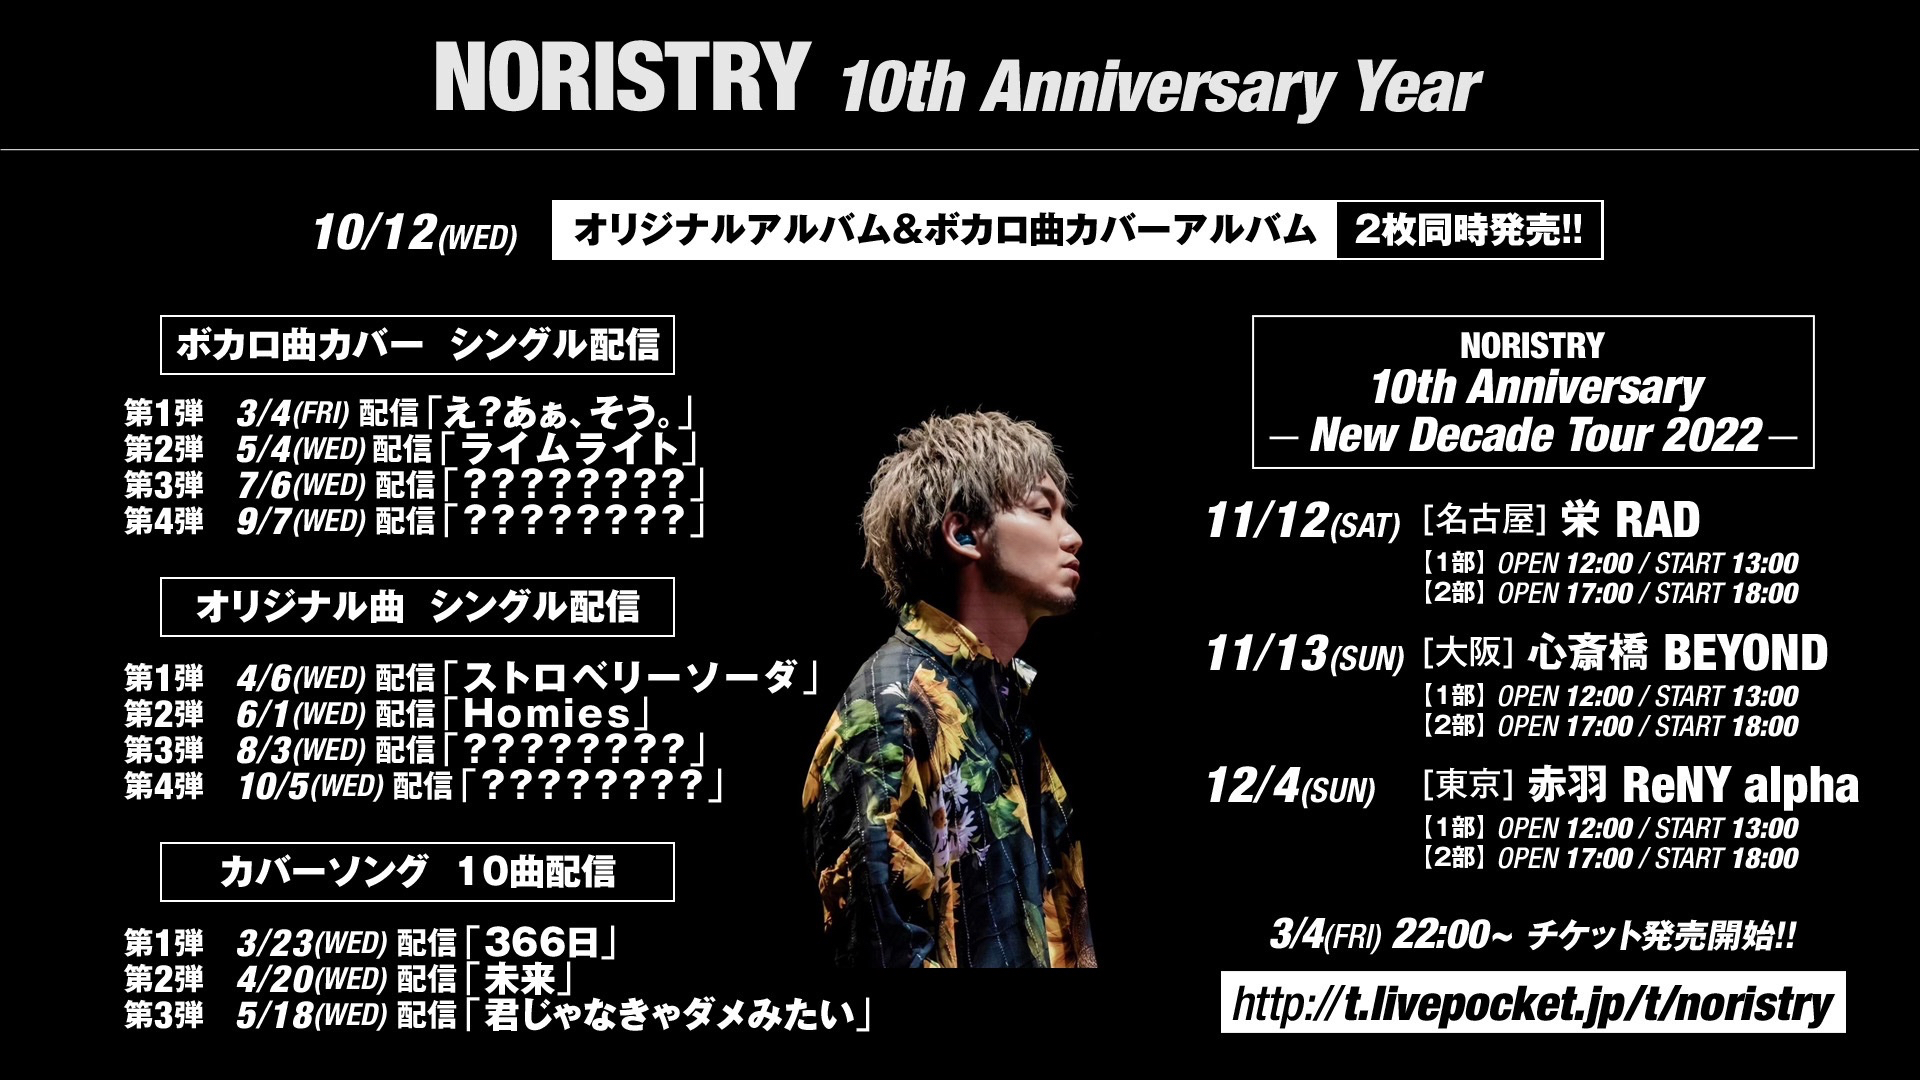 NORISTRY 10th Anniversary ーNew Decade Tour 2022ー